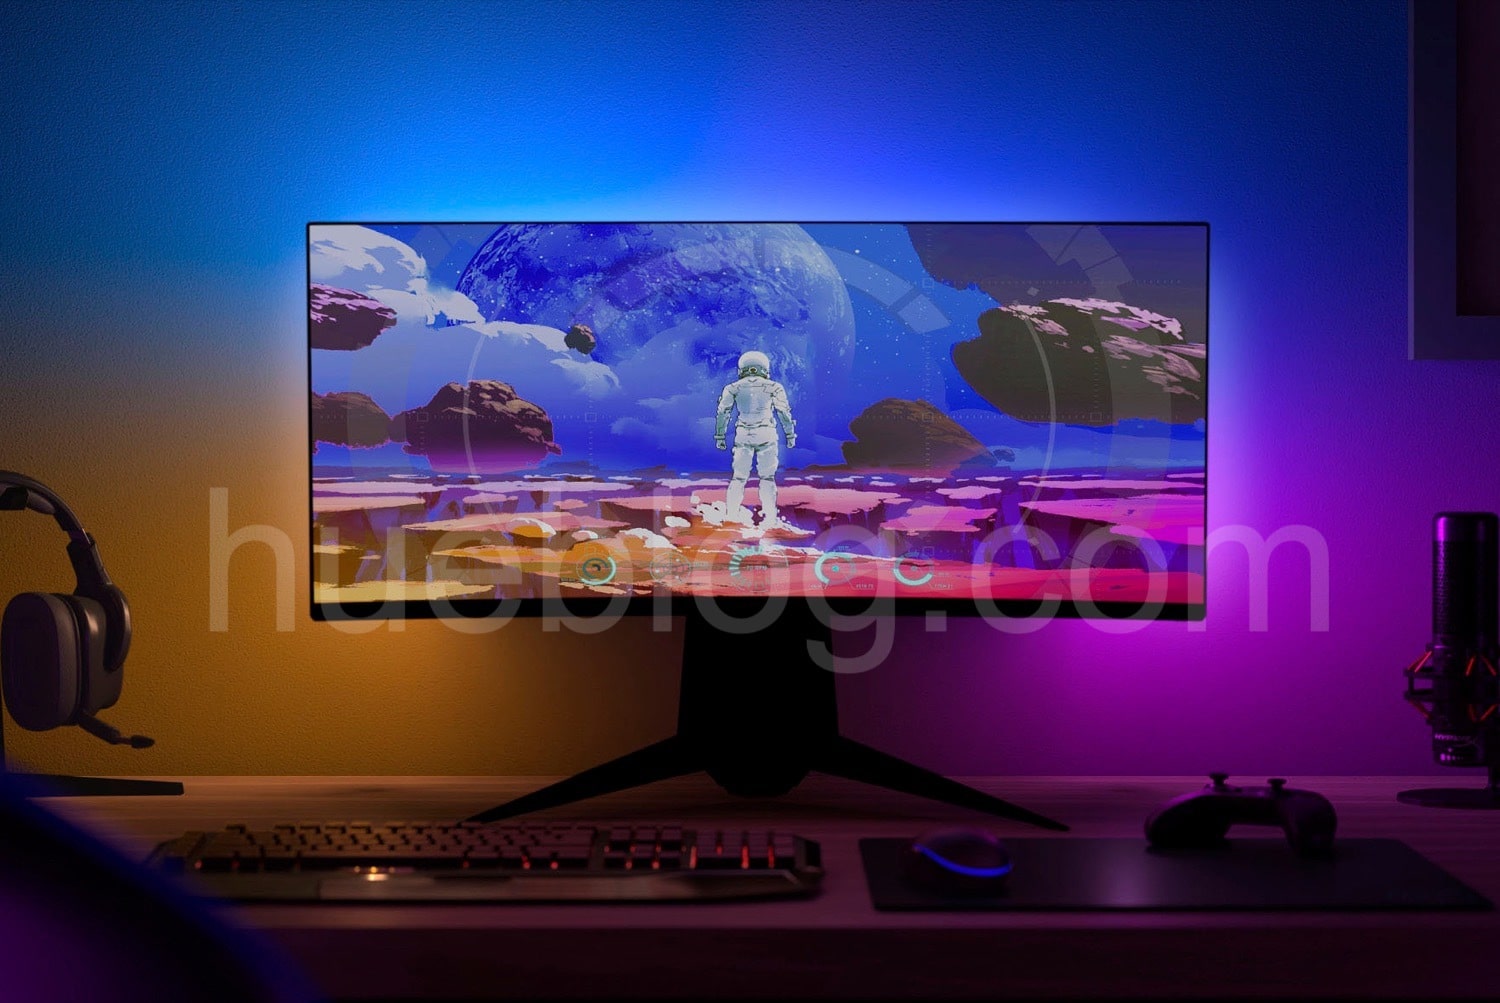 Hueblog: Philips Hue to launch Gradient Lightstrip for PC monitors